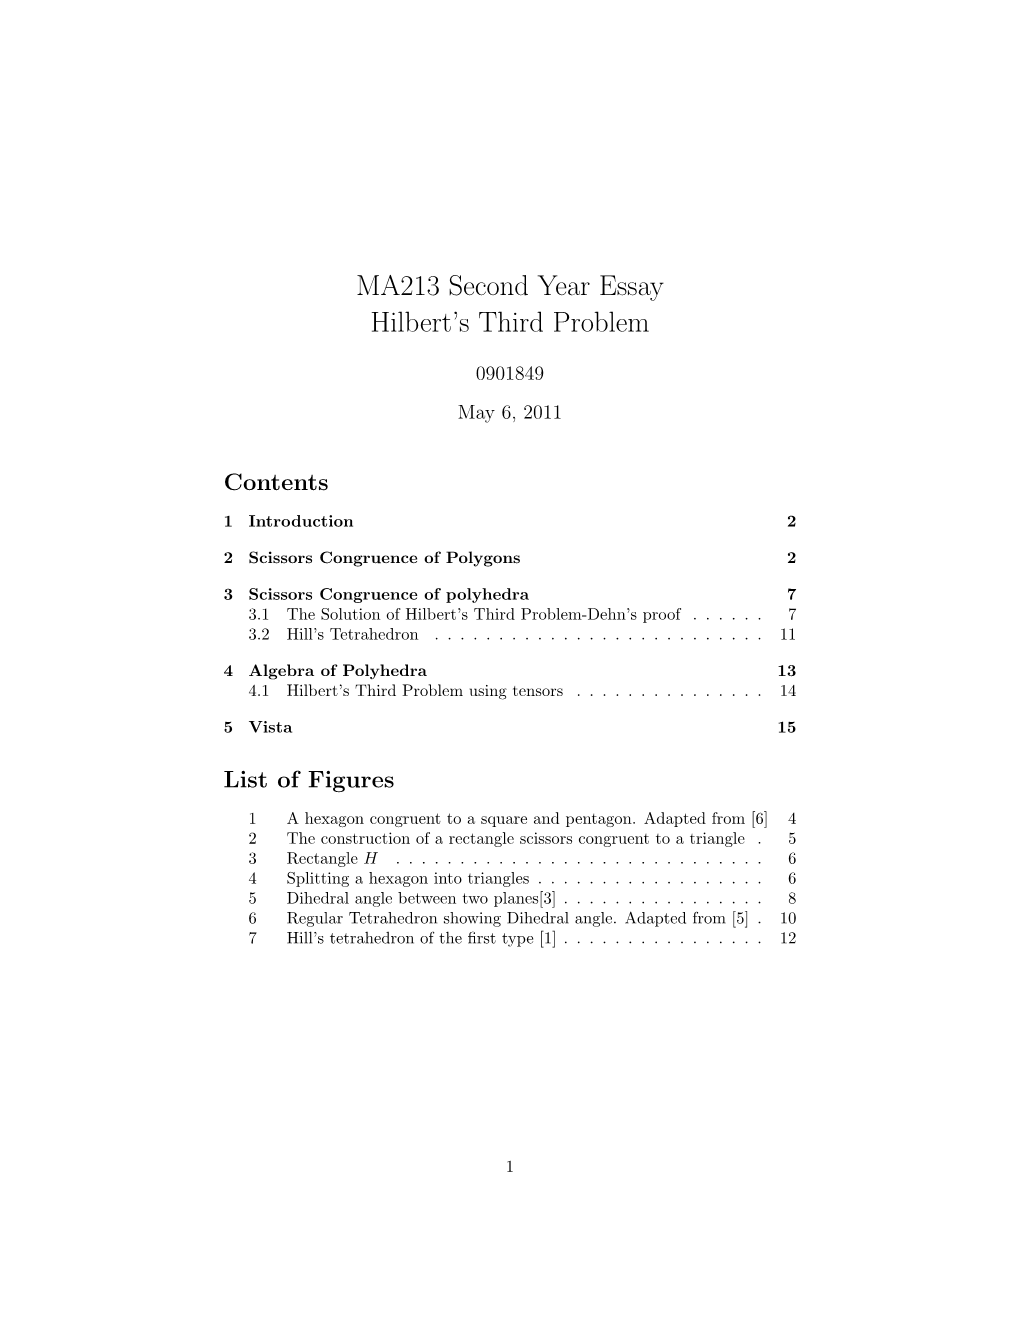 MA213 Second Year Essay Hilbert's Third Problem